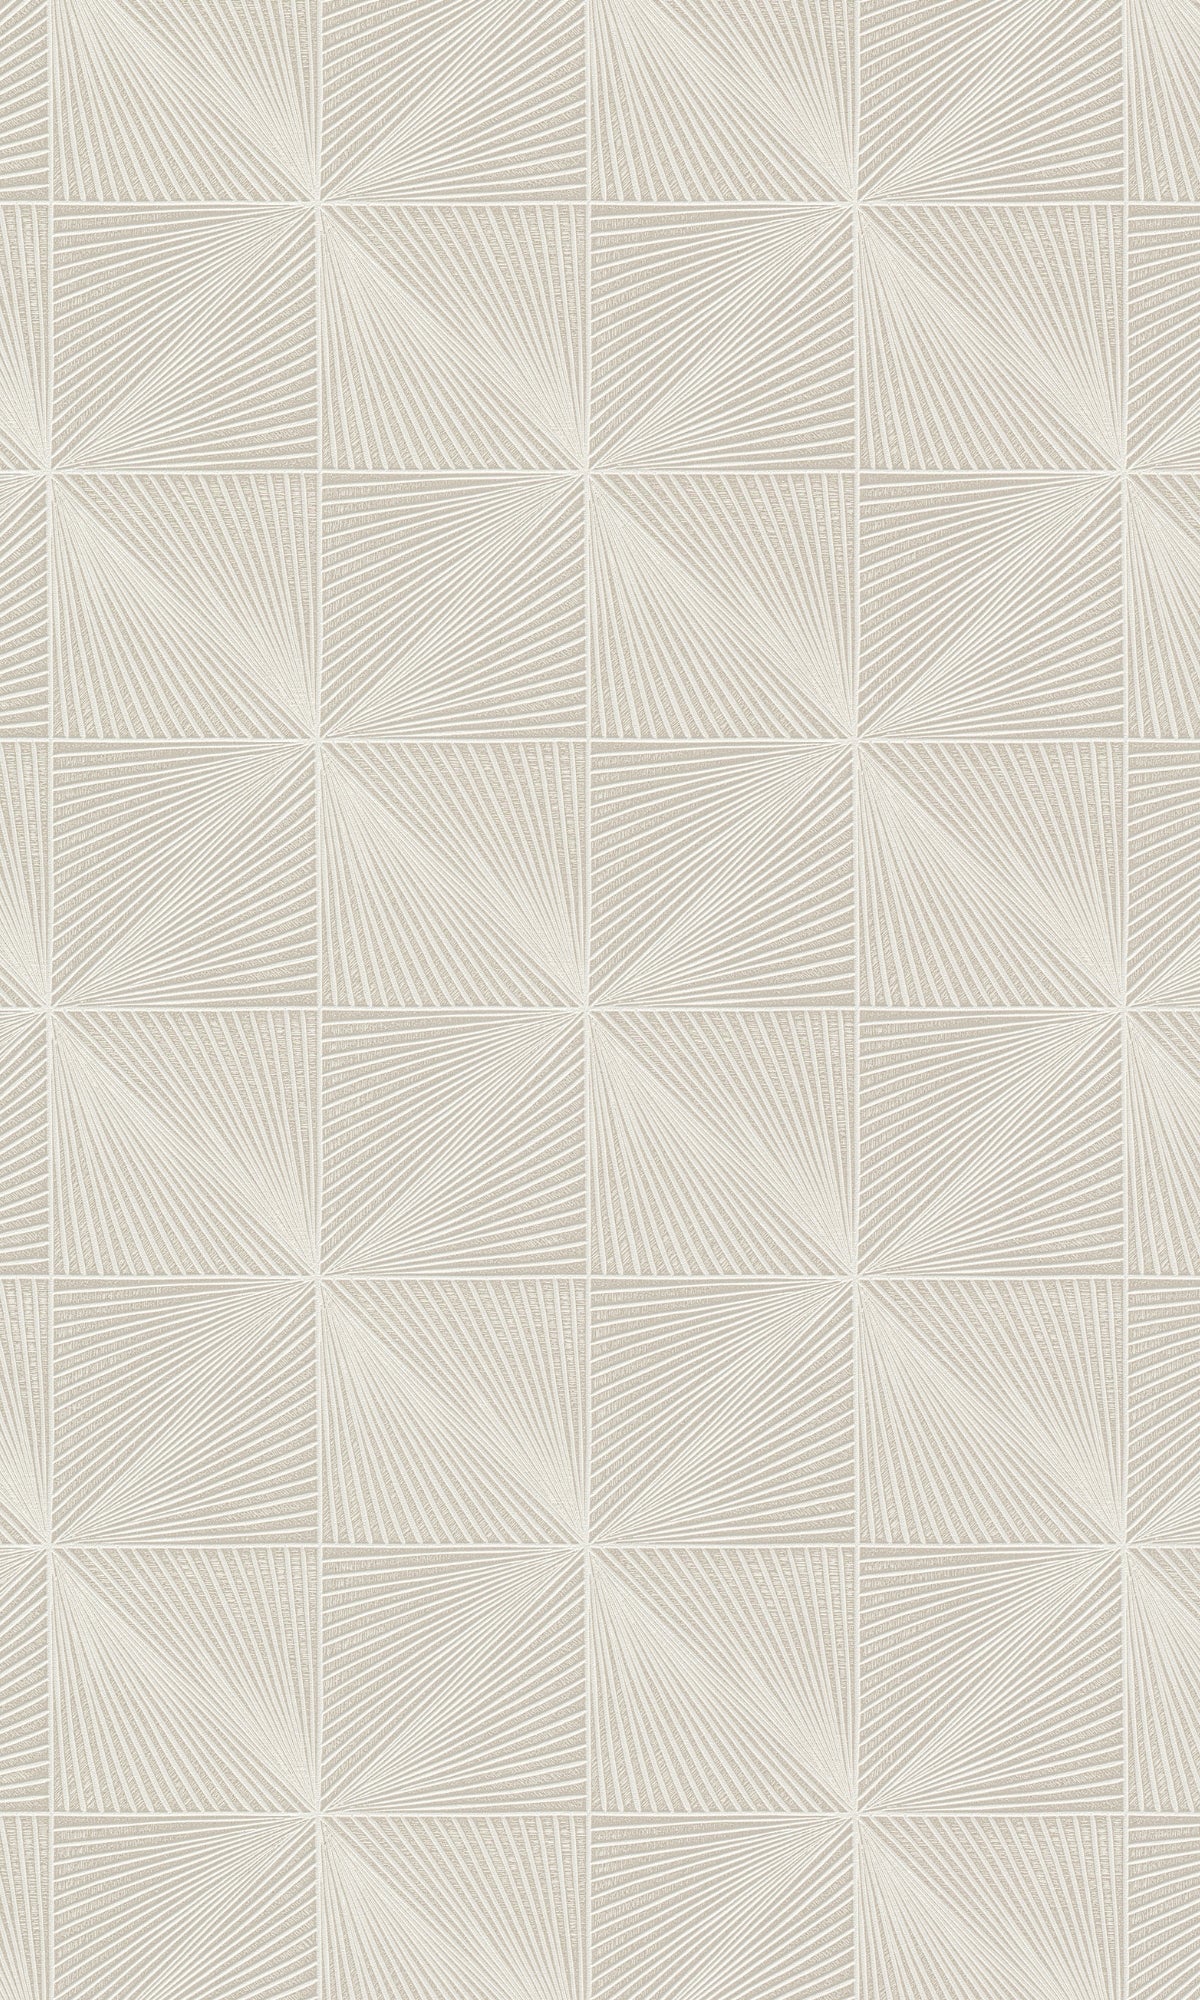 Light Brown Diamond Like Geometric Wallpaper R8738